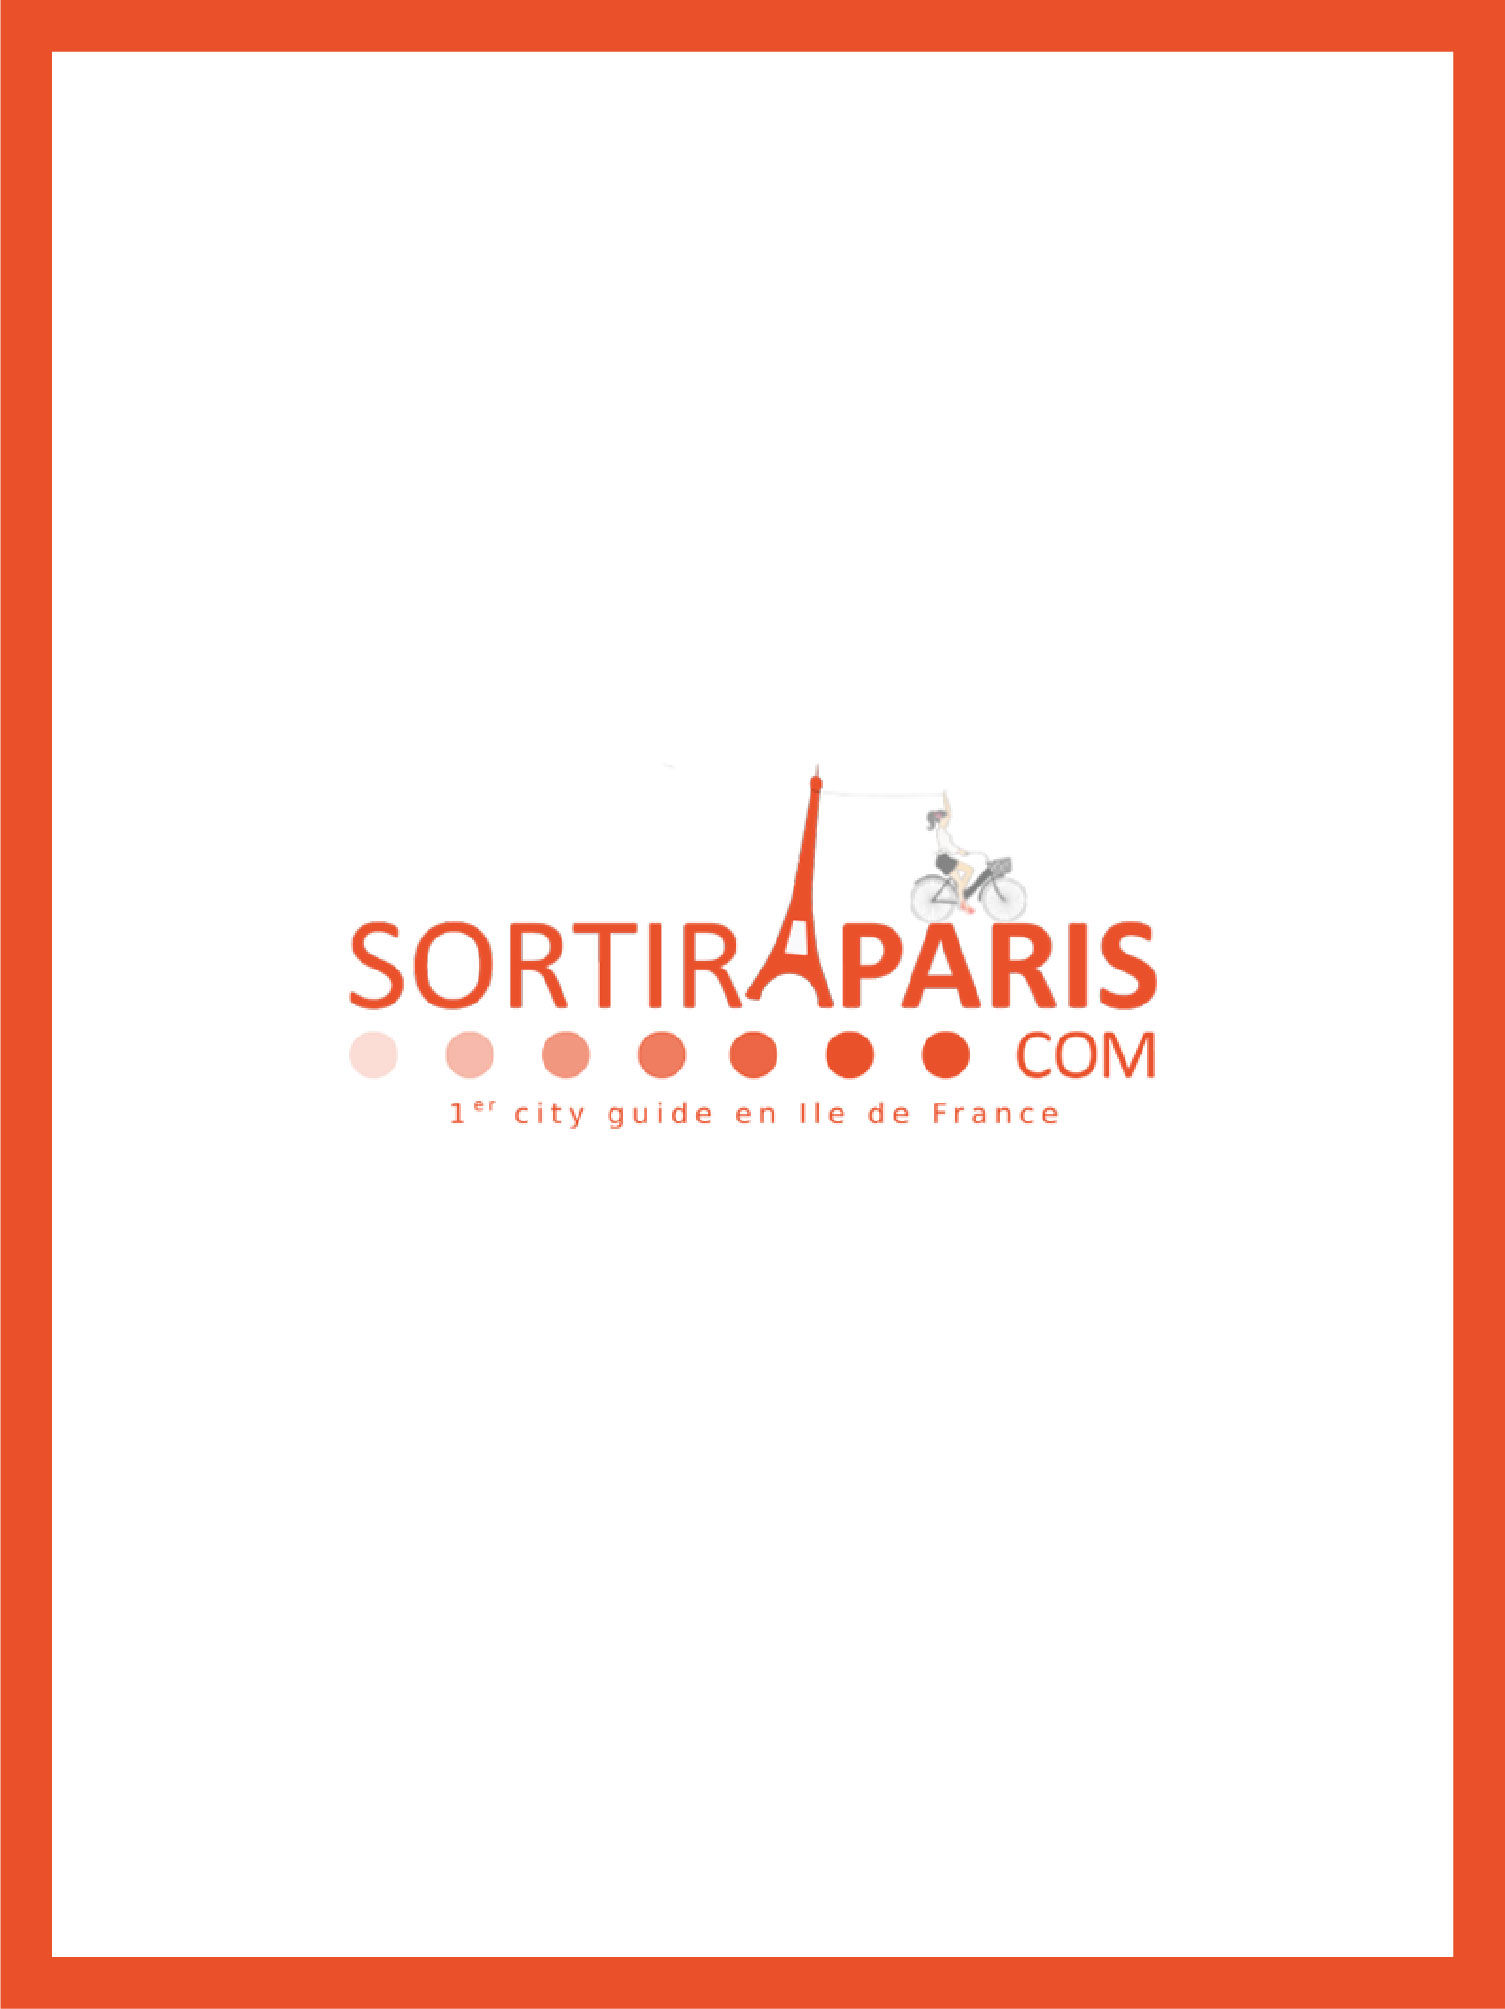 logo of the magazine sortir à paris